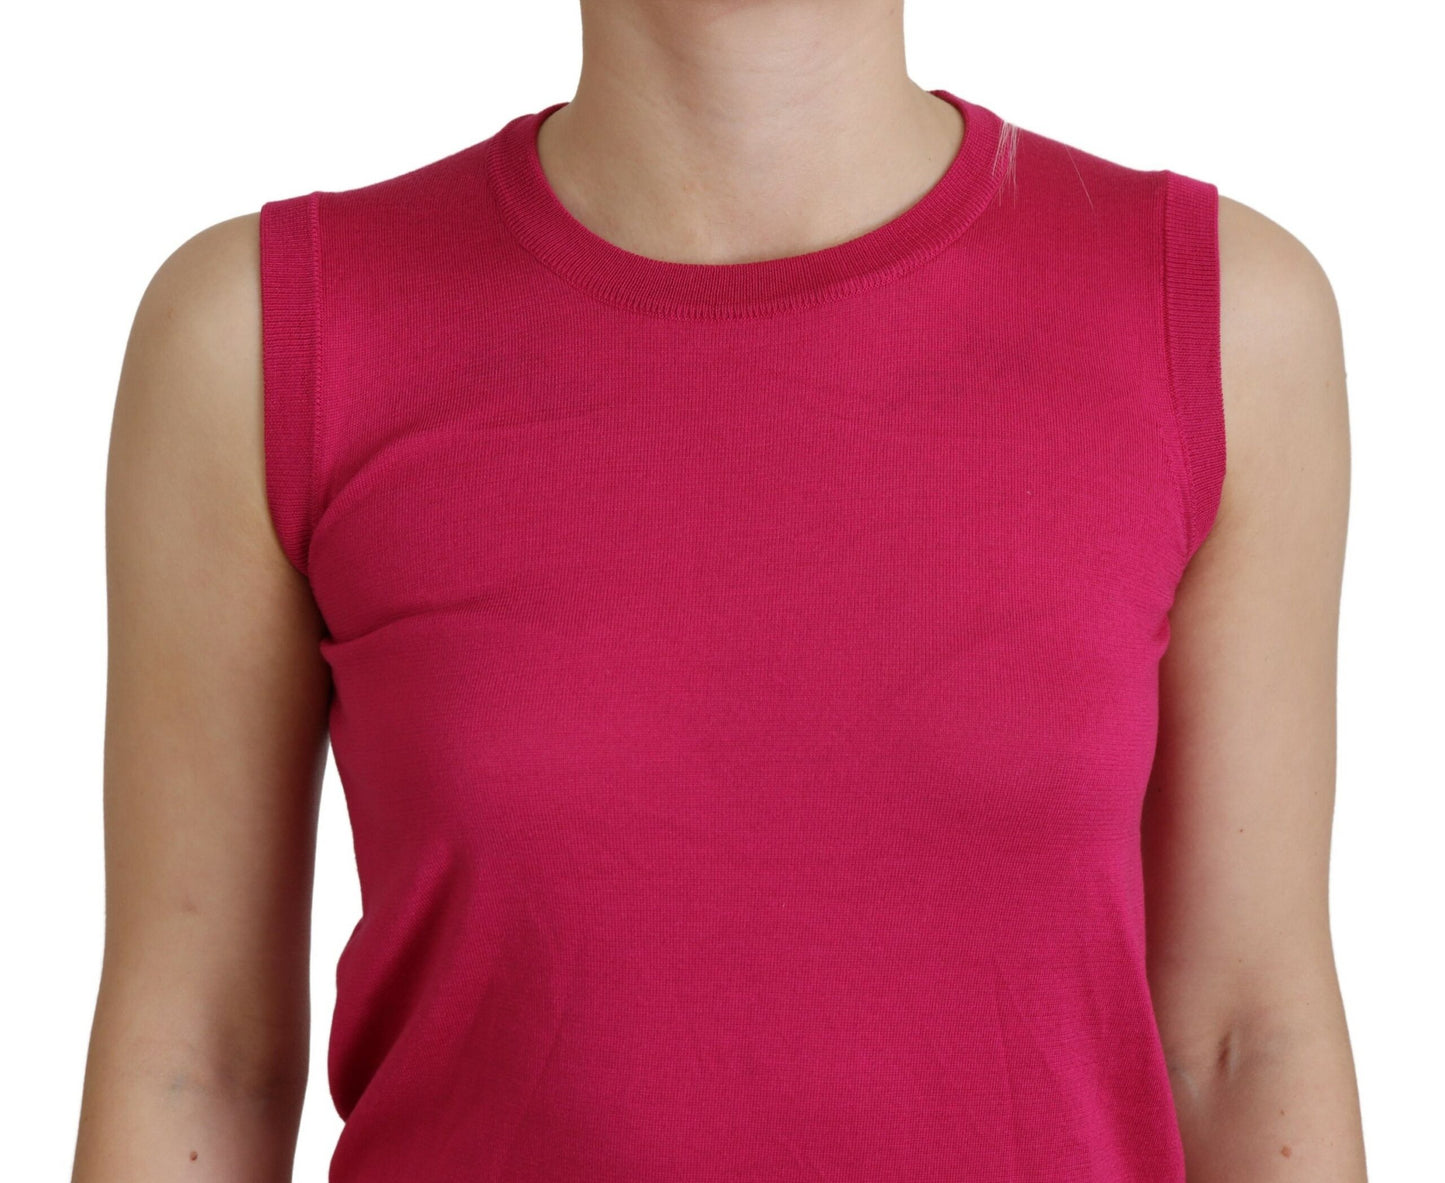 Chic Pink Silk Sleeveless Tank Top Vest